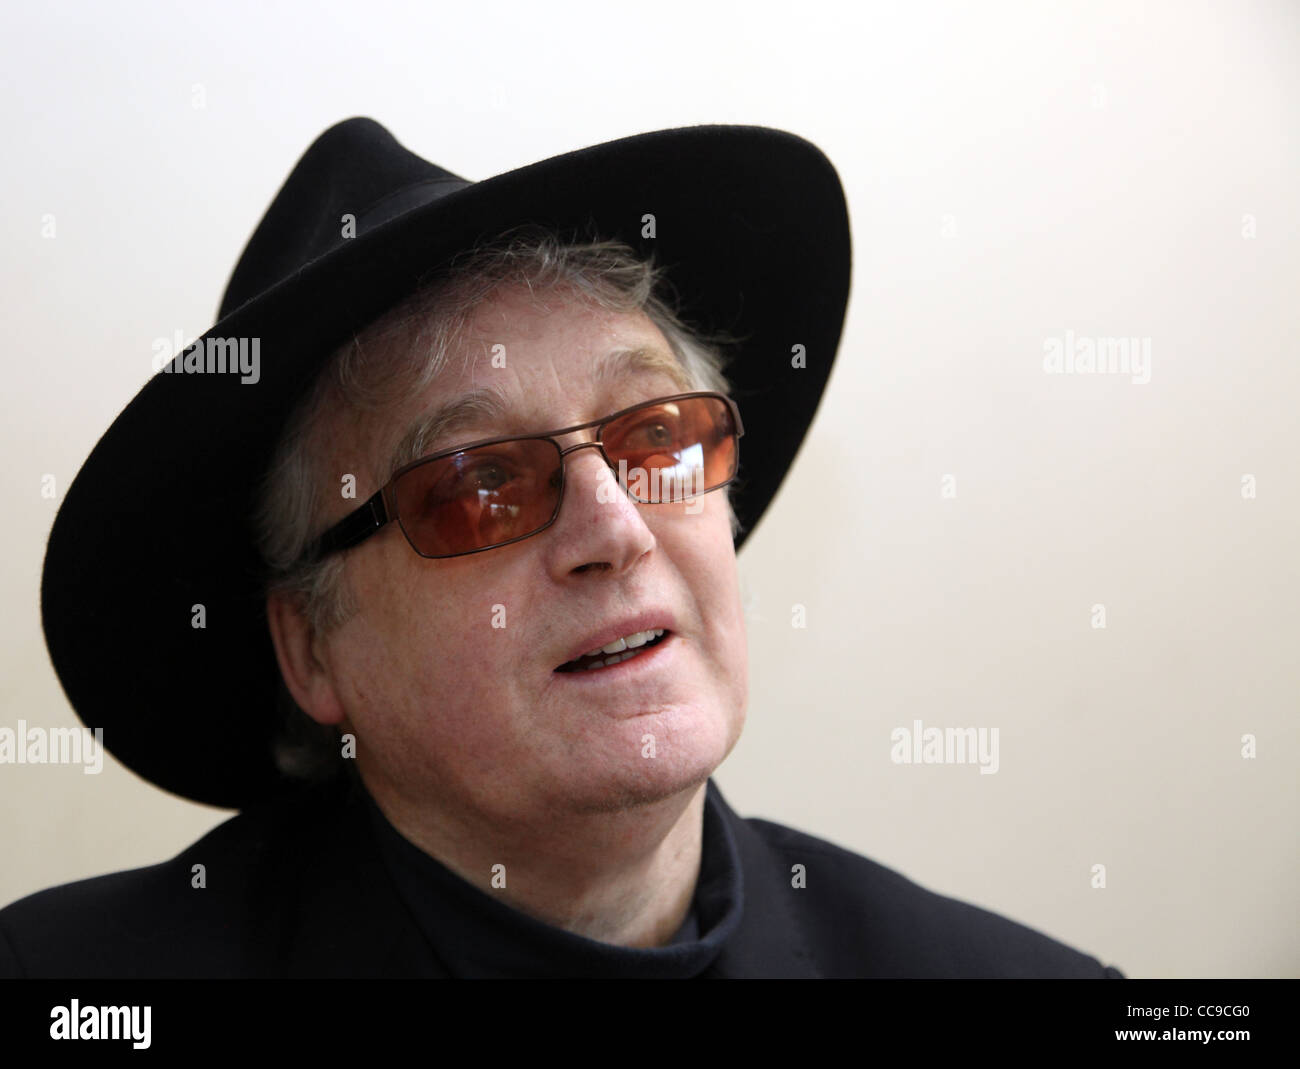 smiling senior citizen in black hat and sunglasses Stock Photo